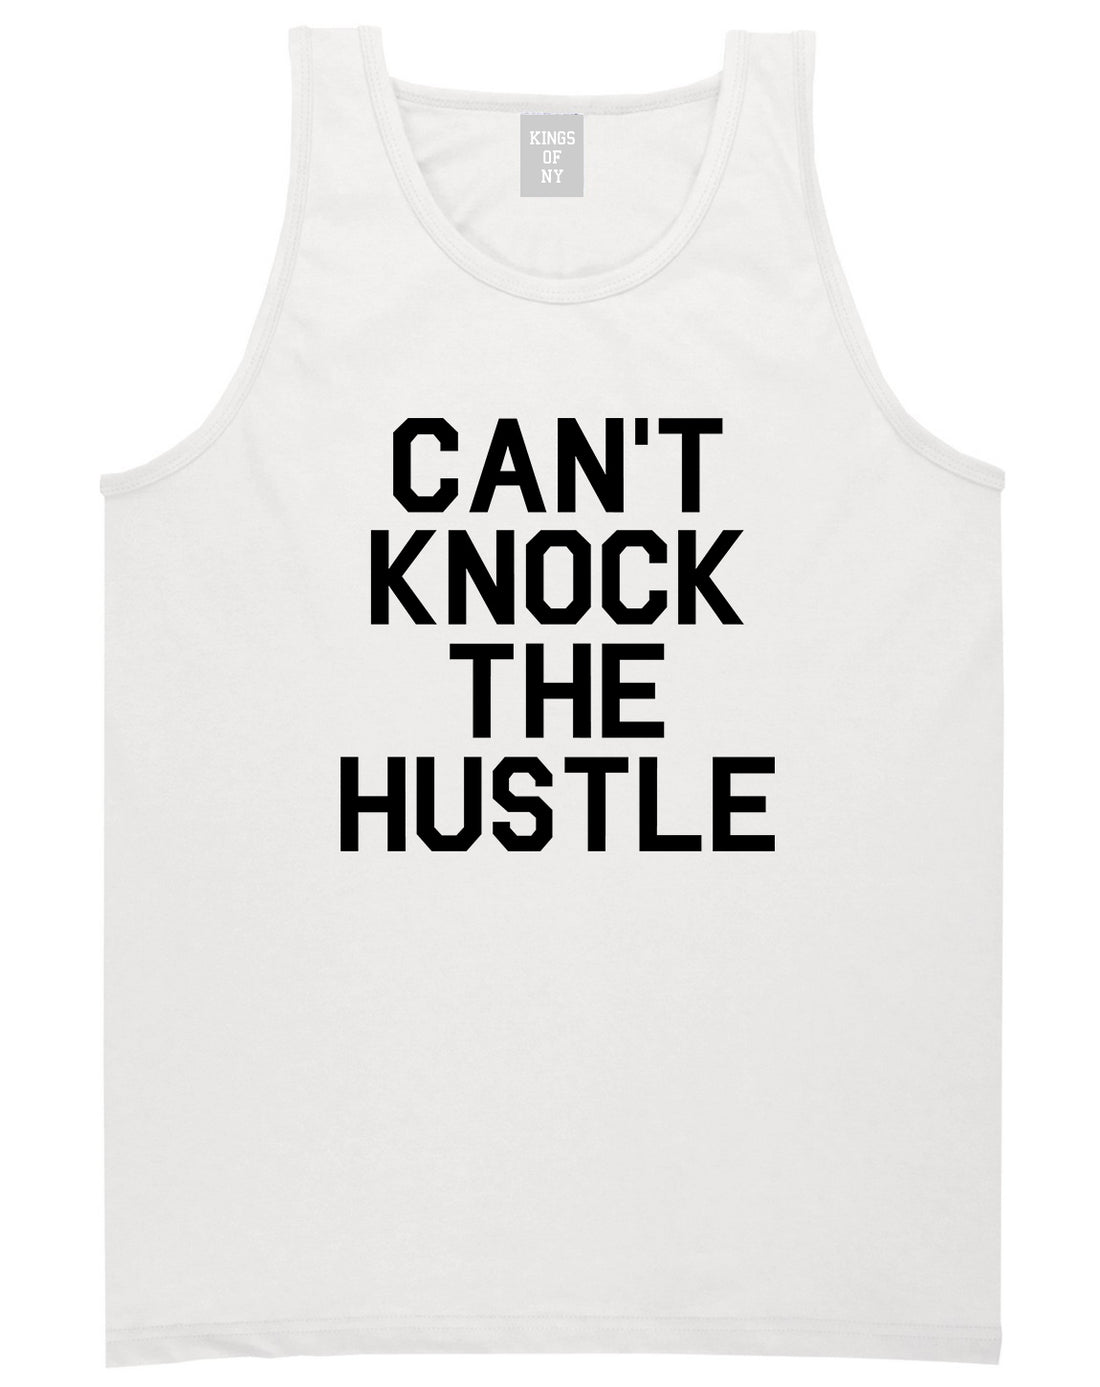 Cant Knock The Hustle Mens Tank Top Shirt White